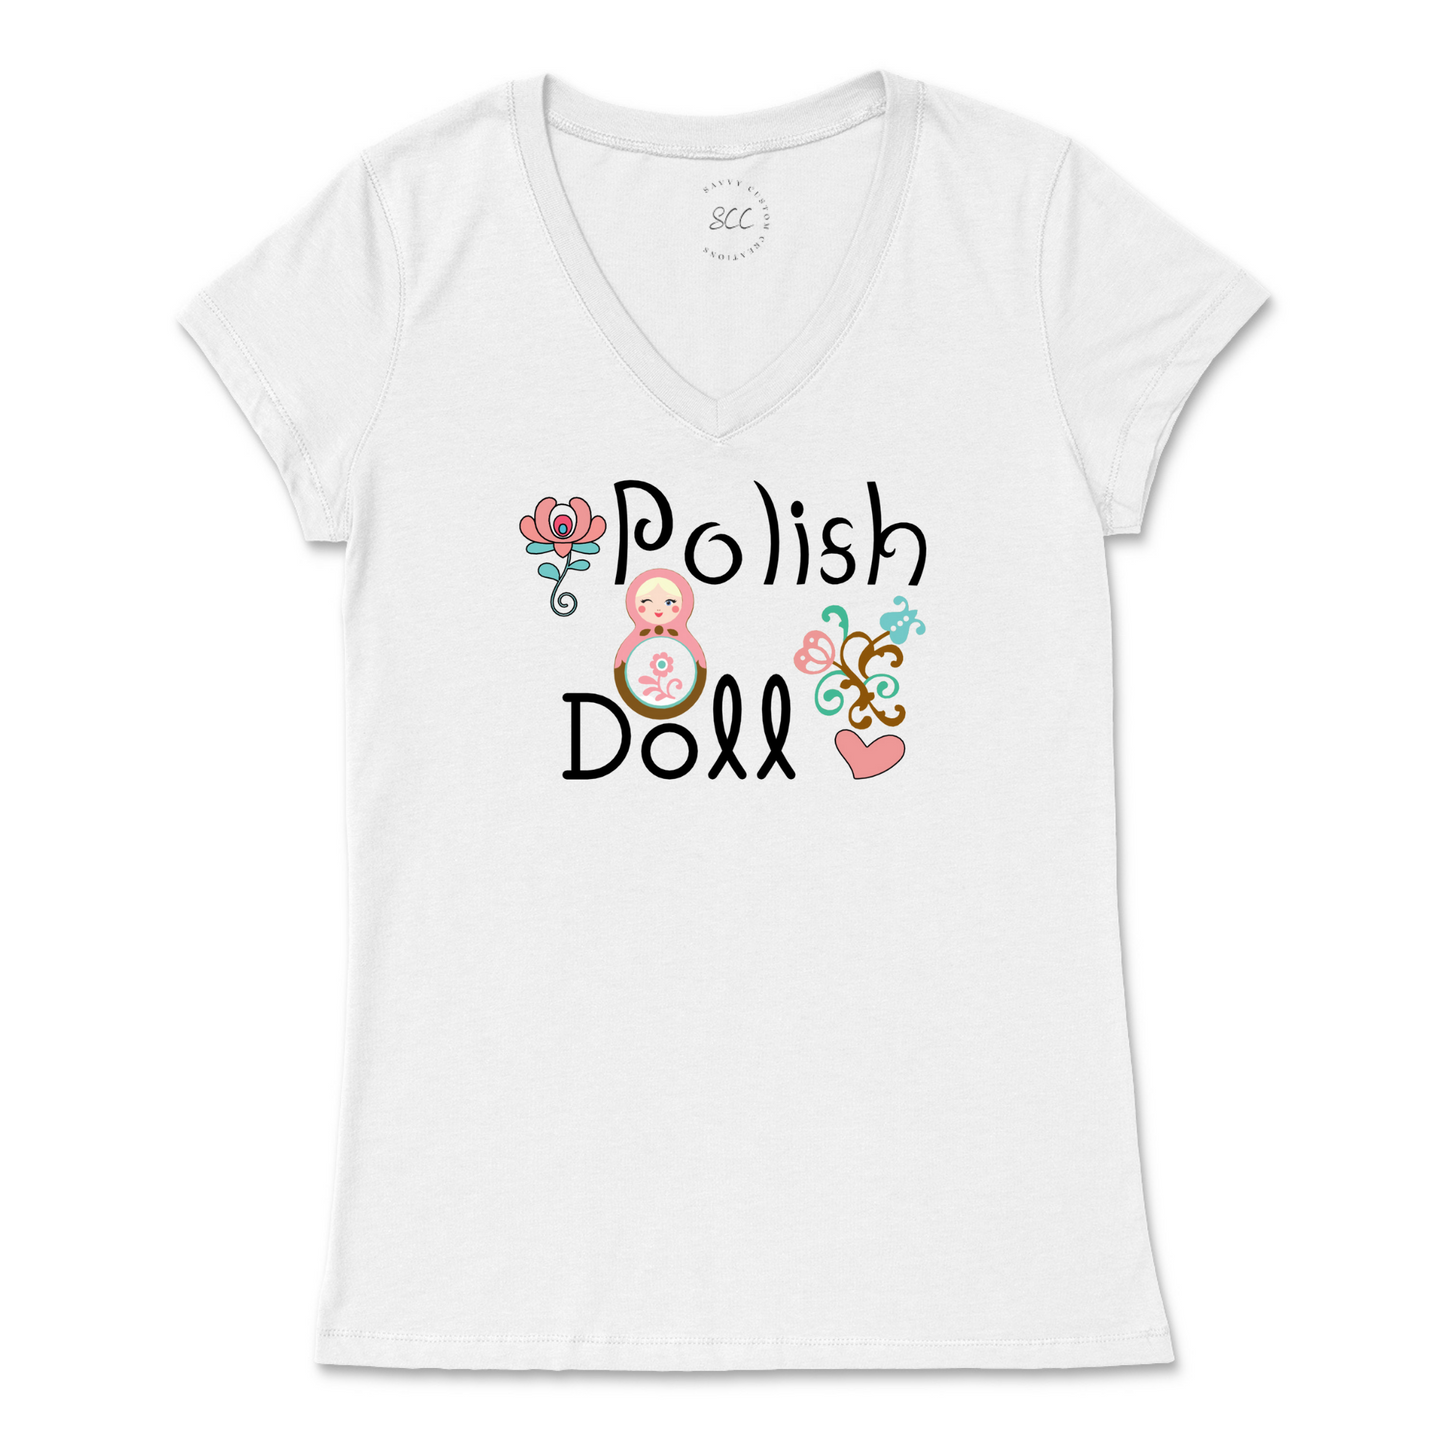 POLISH DOLL - Women’s VNeck T-Shirt